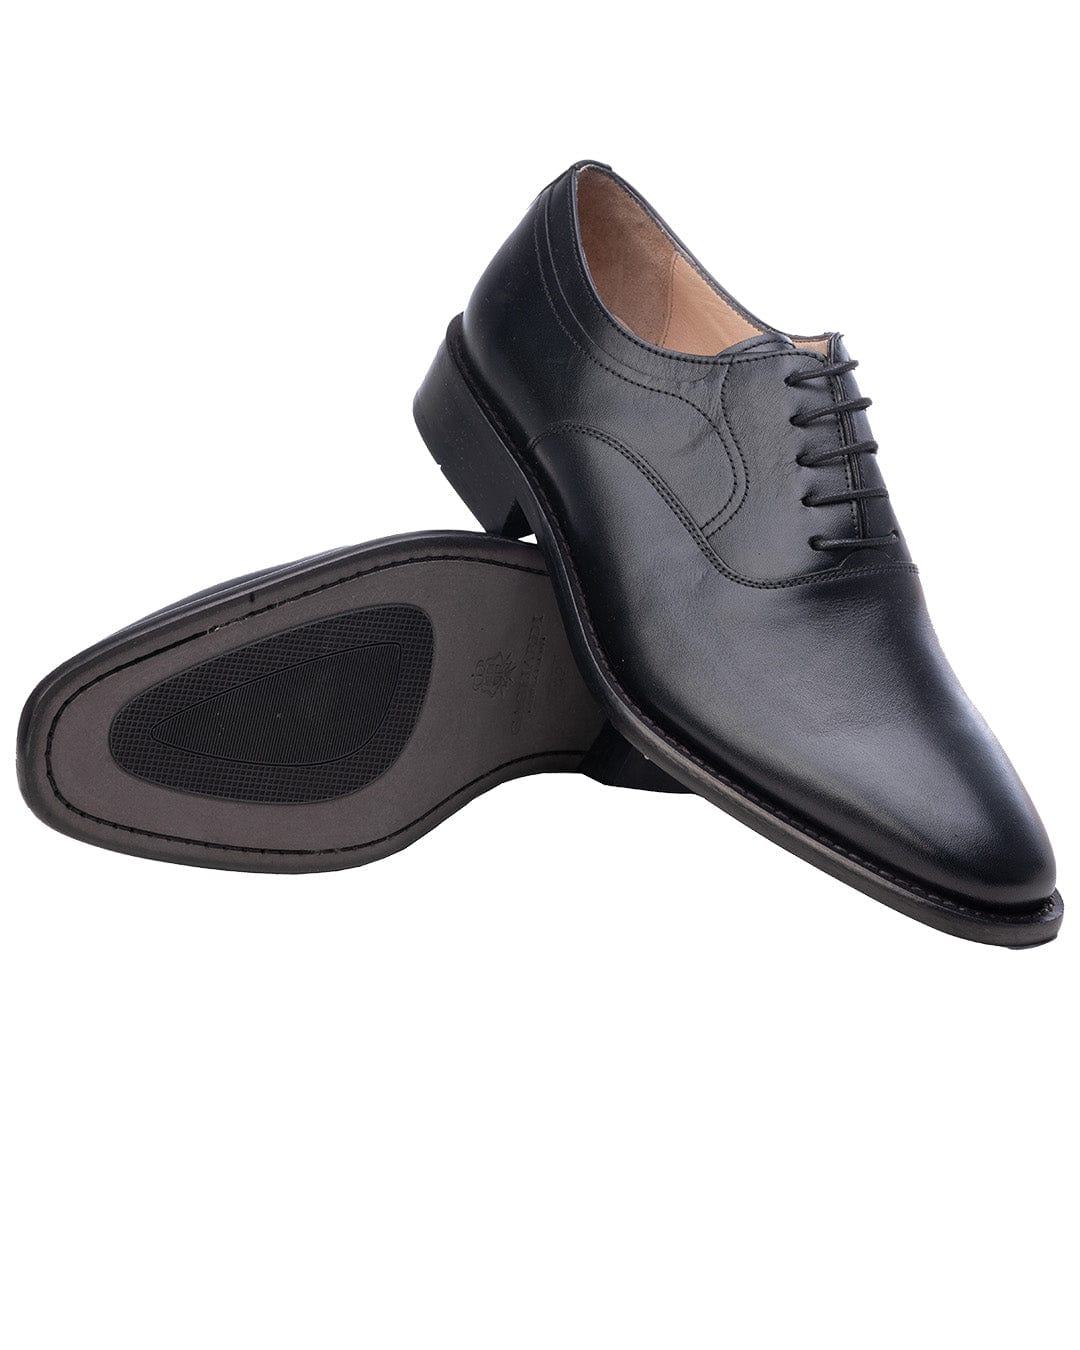 Gagliardi Shoes Gagliardi Leather Lace-Up Classic Black Shoes